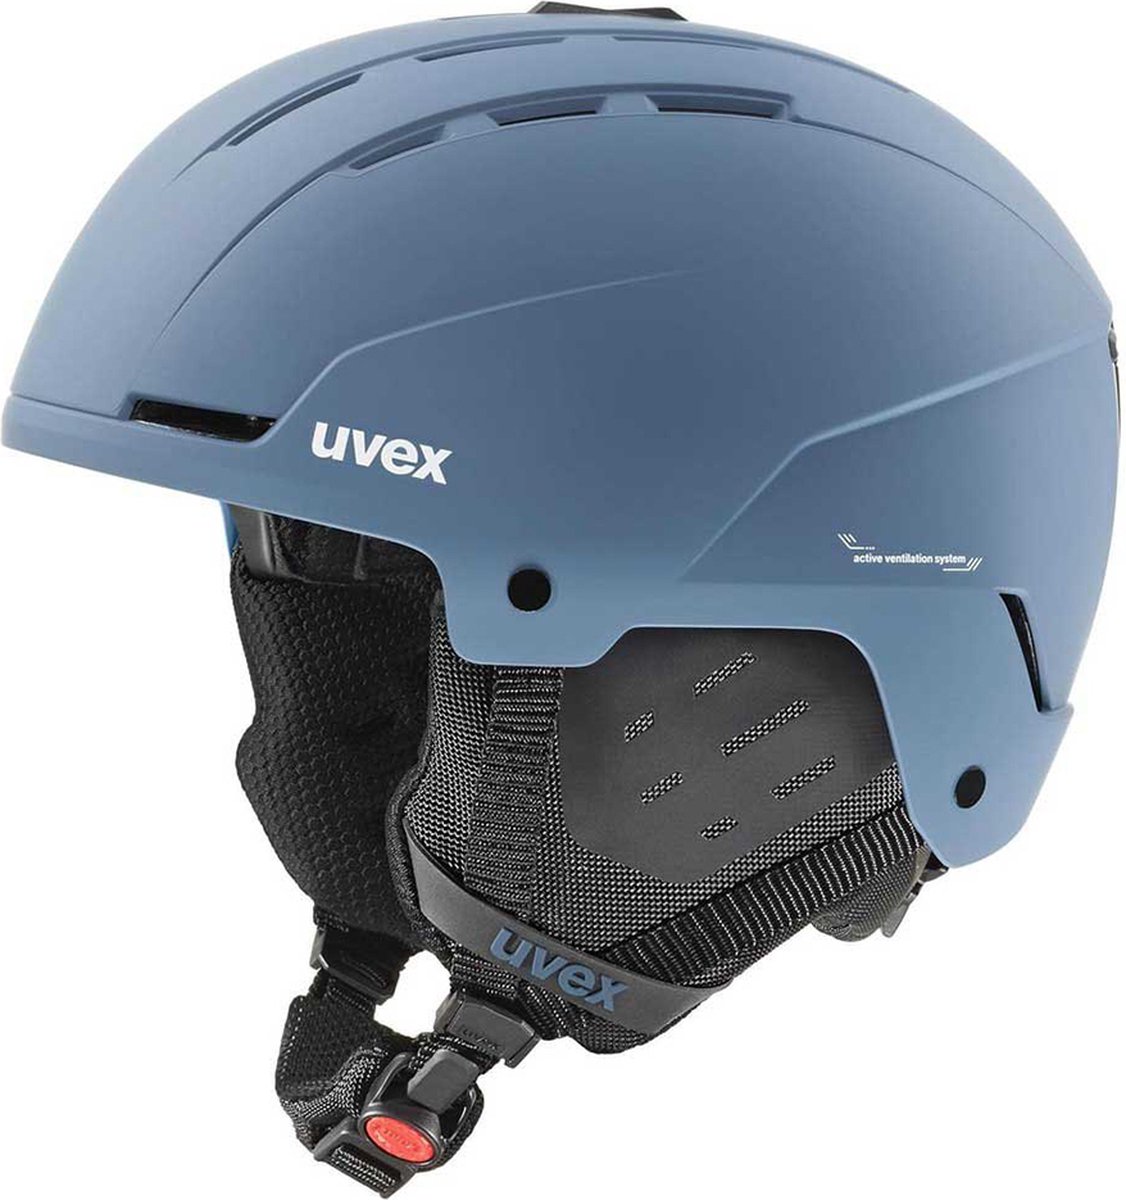 Uvex skihelm Stance Blauw - Maat 51-55